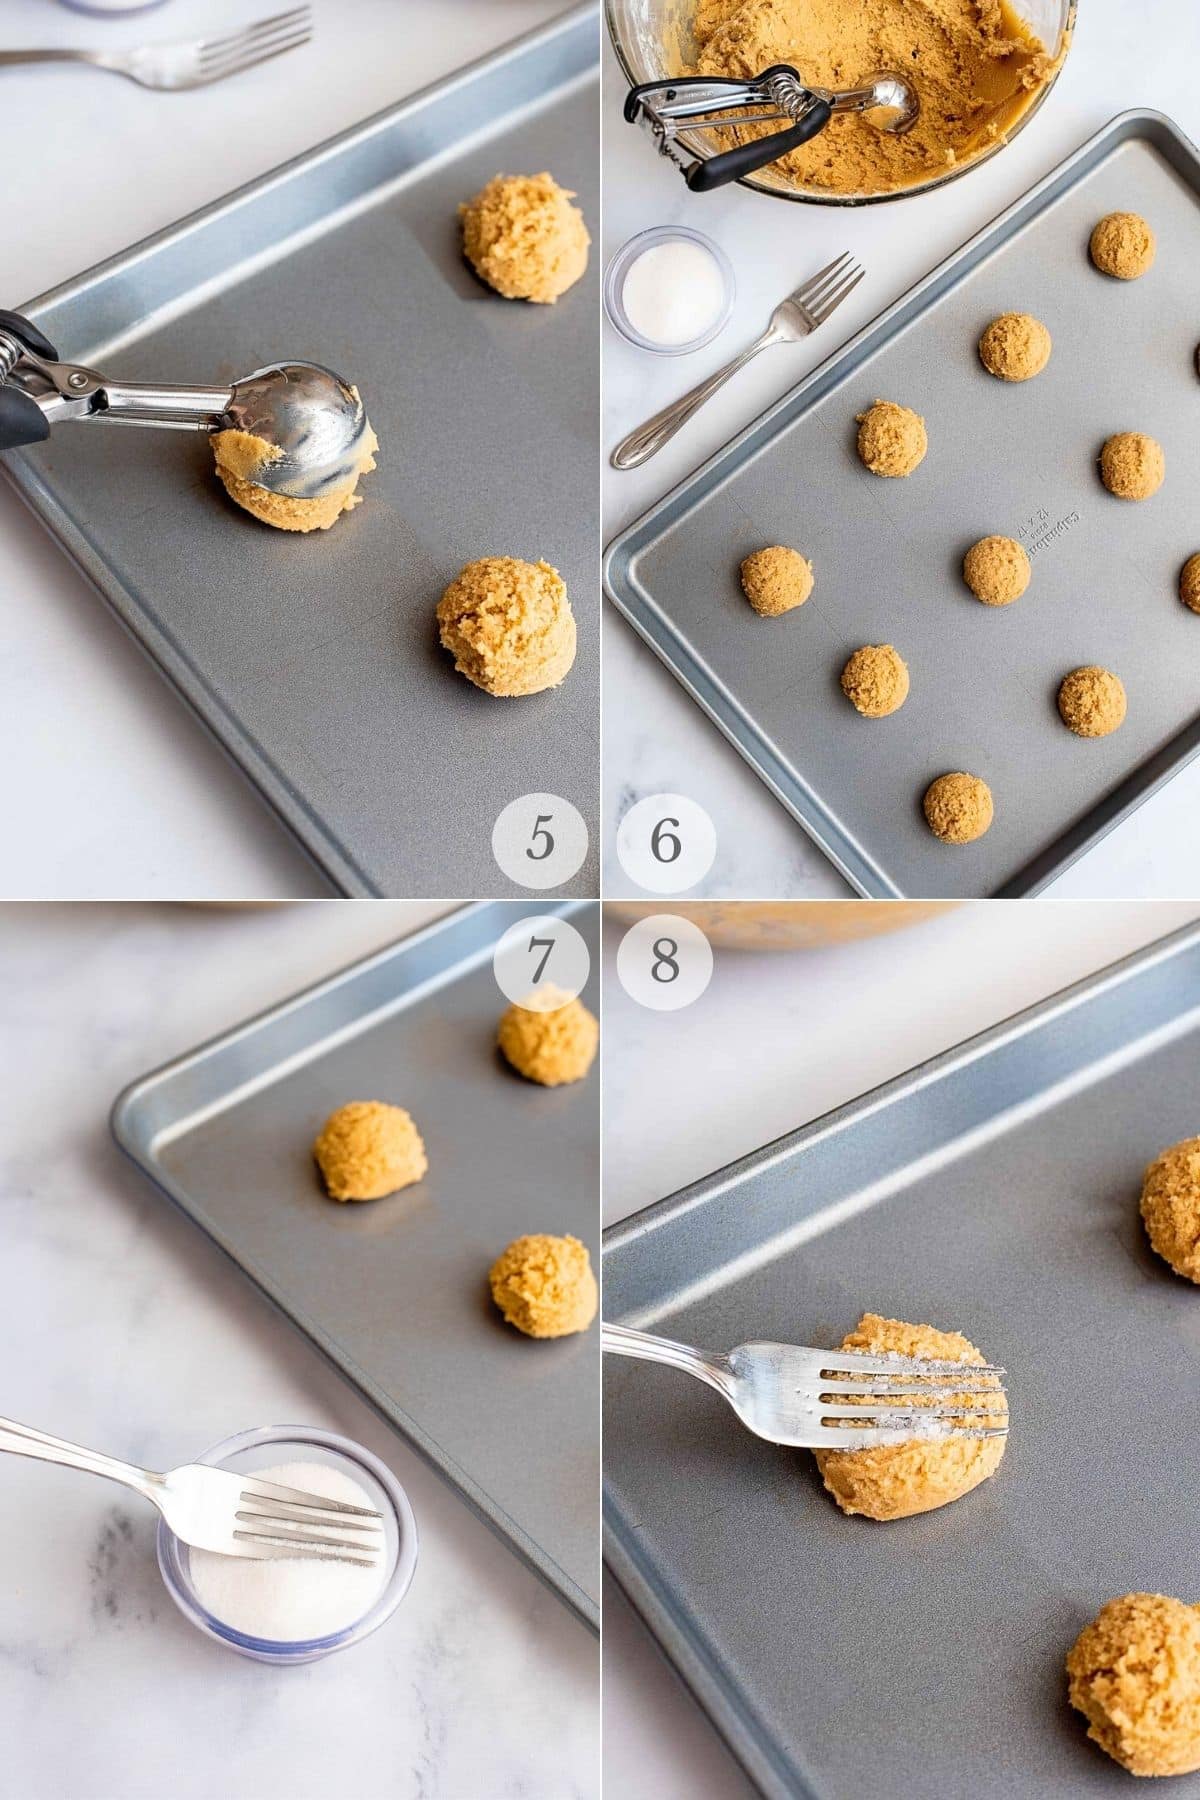 peanut butter cookies recipe steps 5-8